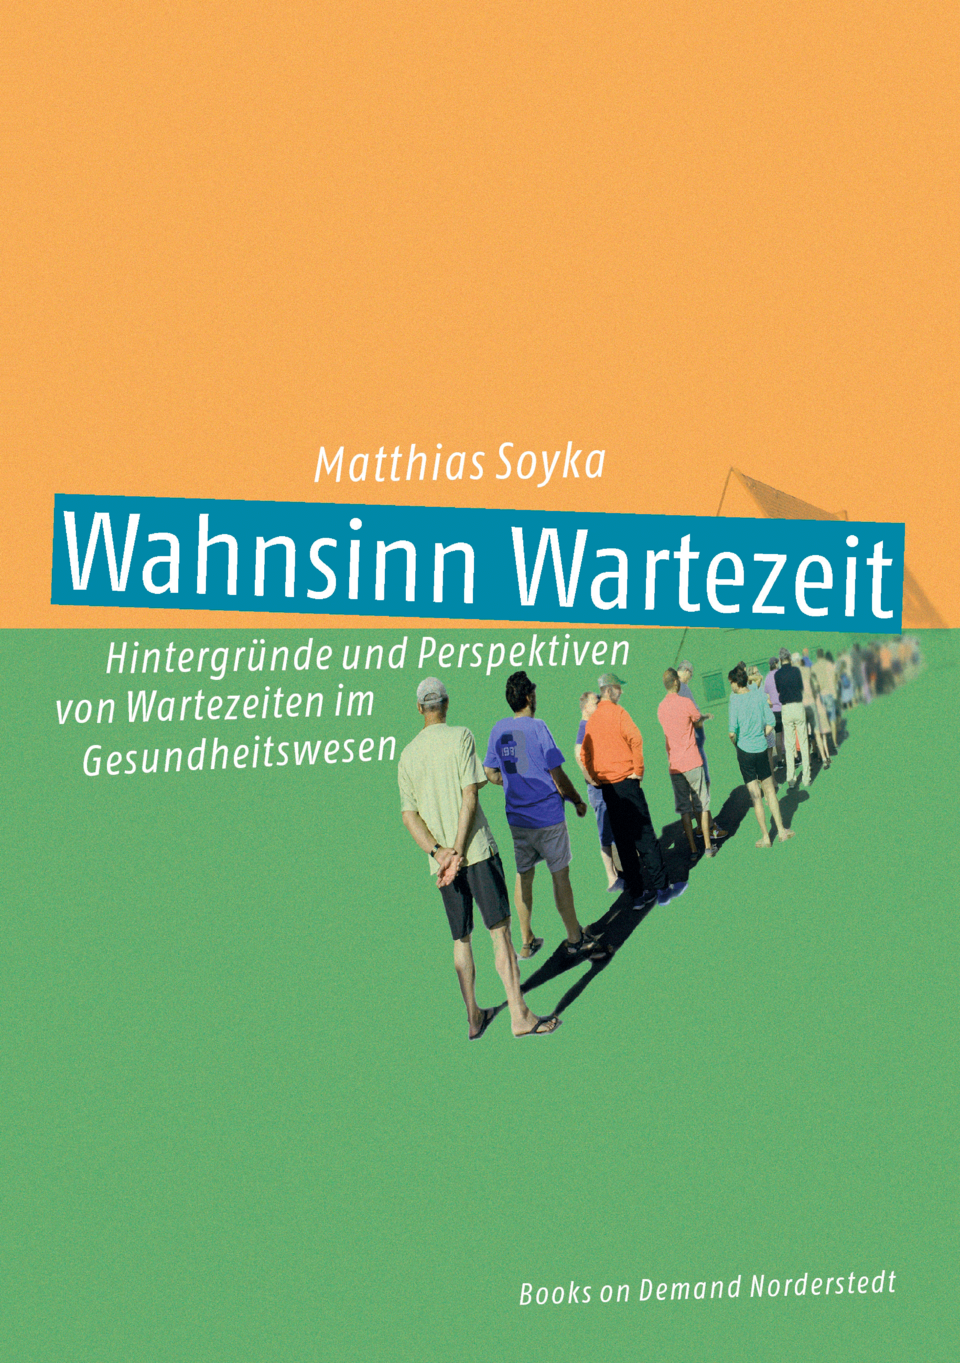 Dr. Matthias Soyka: Wahnsinn Wartezeit, Verlag Books on Demand, Norderstedt, 16,99 Euro, ISBN: 9783744812771, www.wahnsinn-wartezeit.de